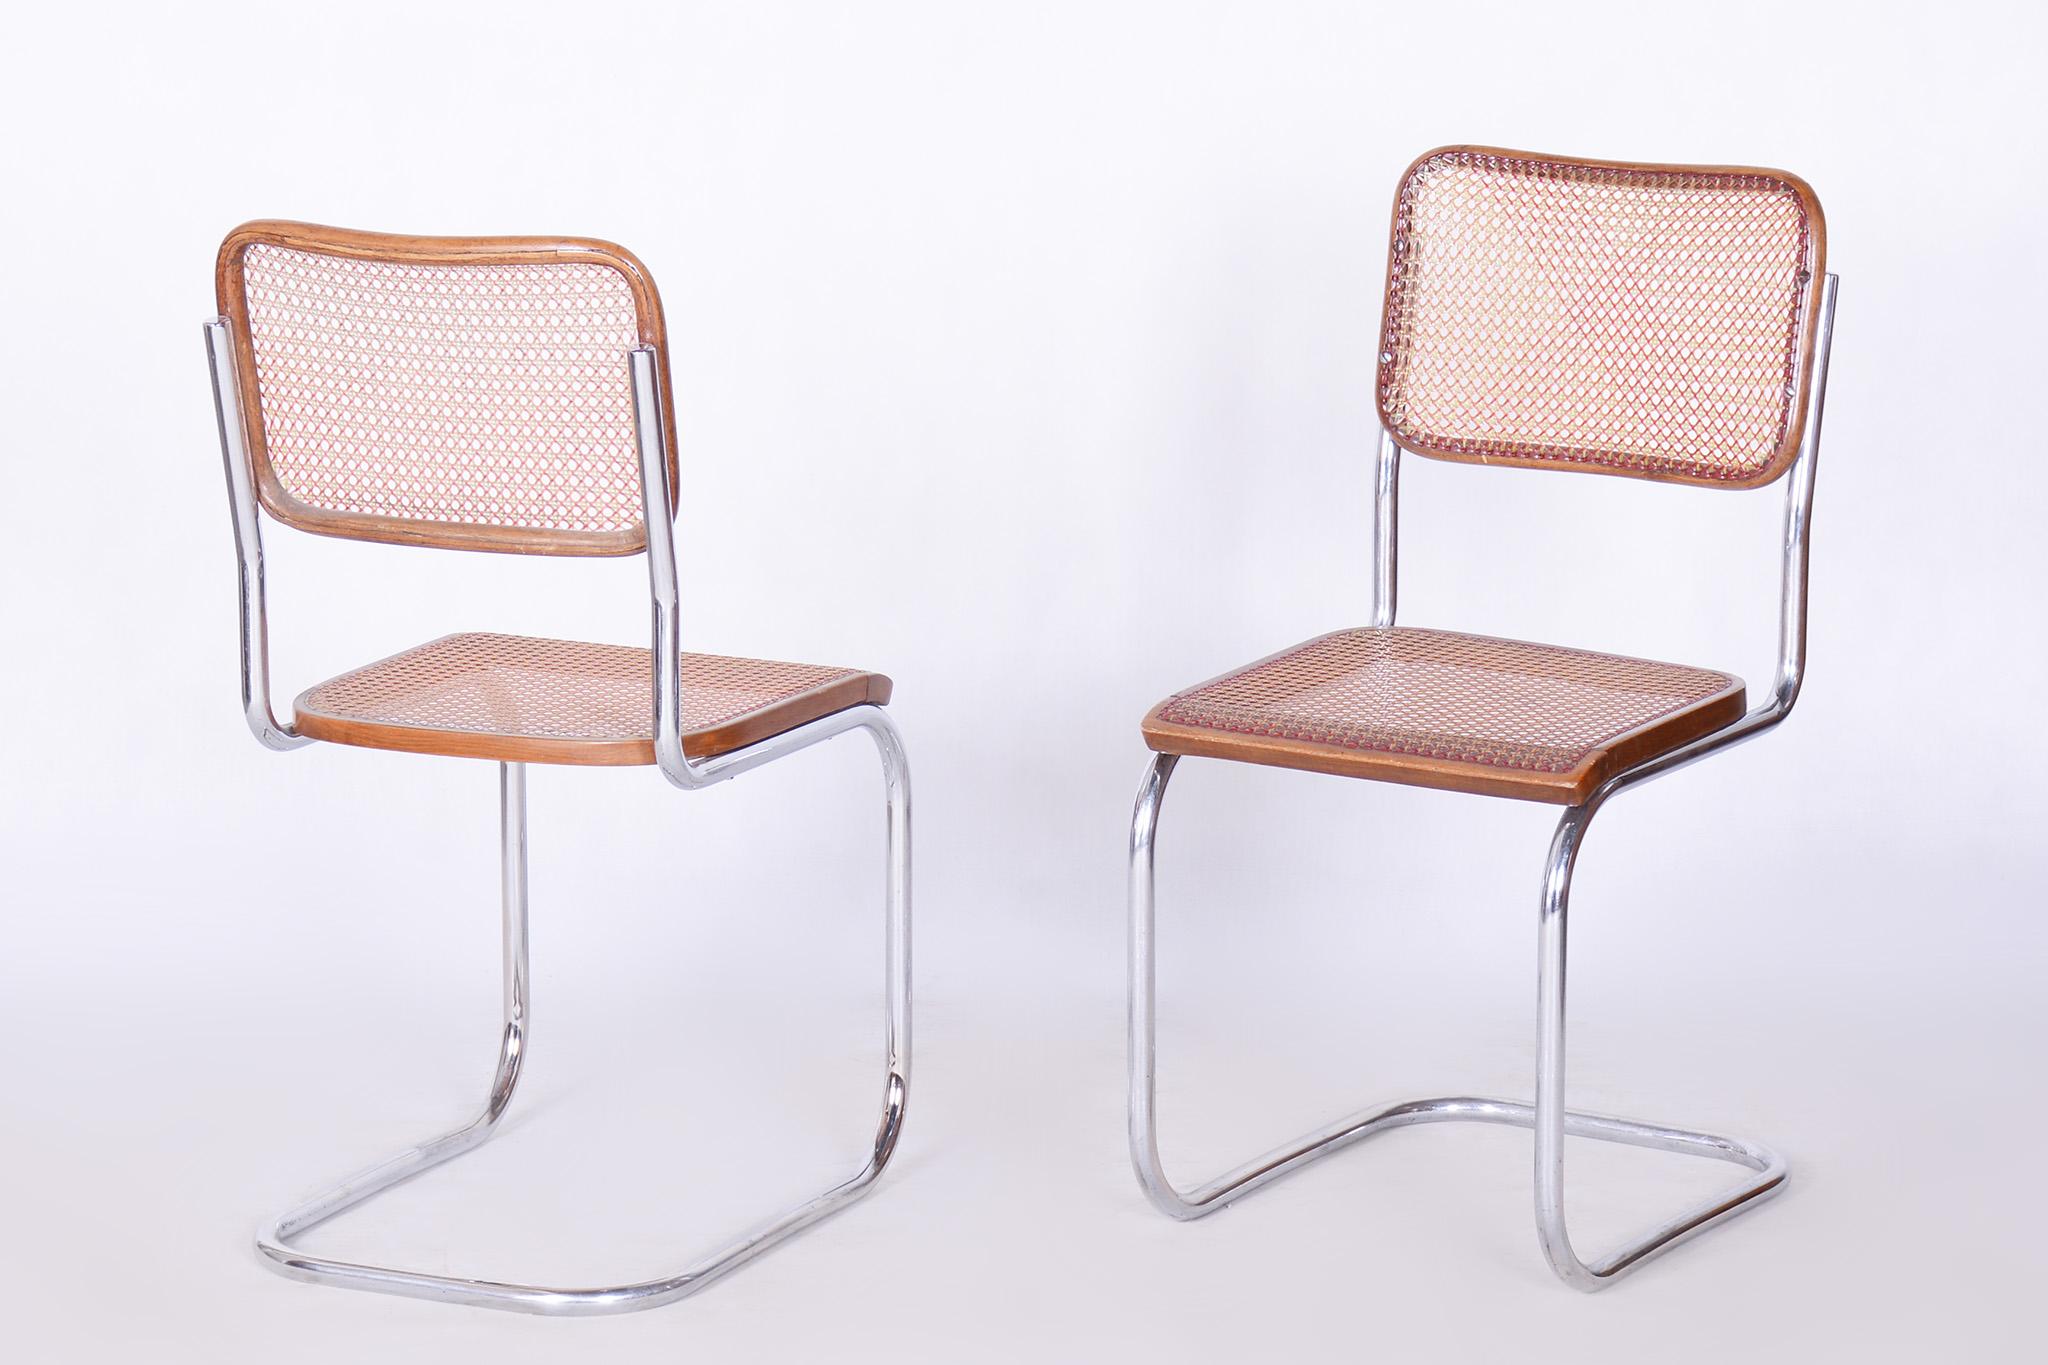 Restored Bauhaus Pair of Chairs, Robert Slezak, Chrome, Beech, Czechia, 1930s For Sale 4